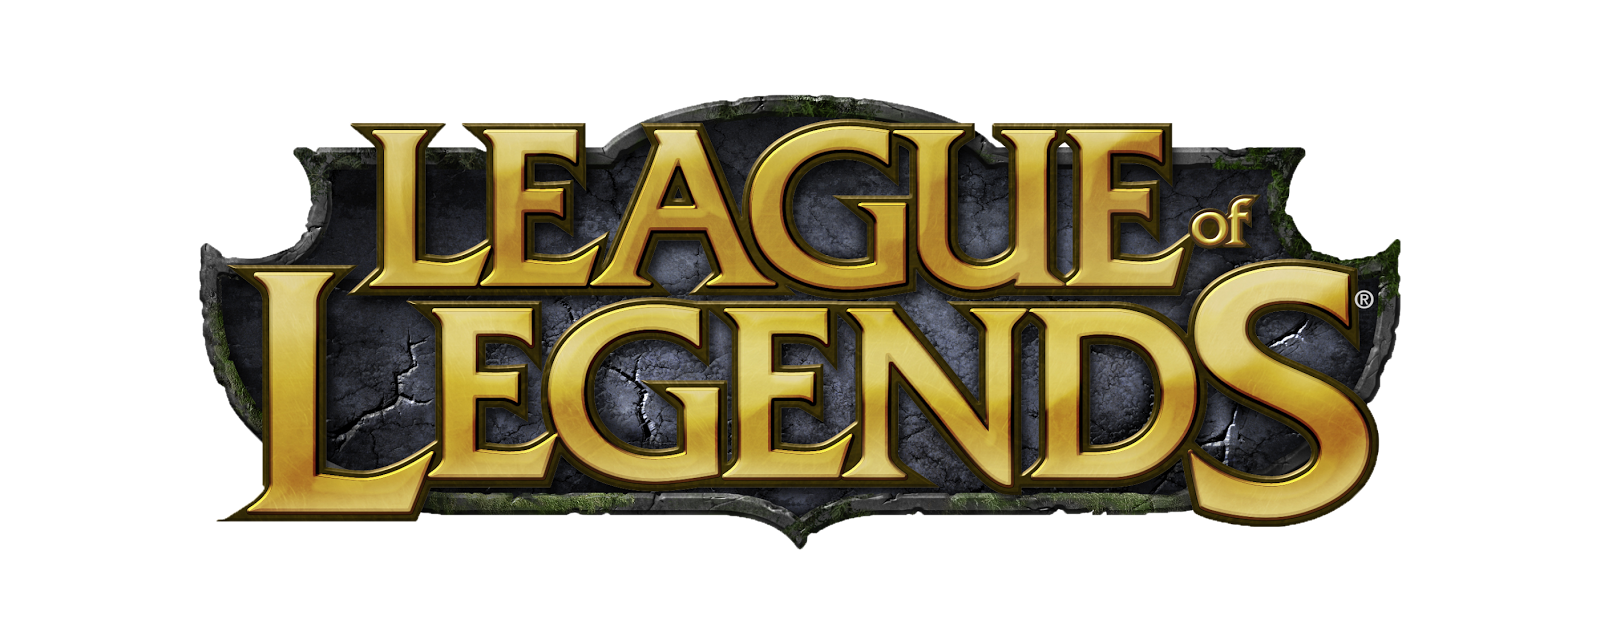 League of Legends Logo Video Games Brand - League of Legends png ...